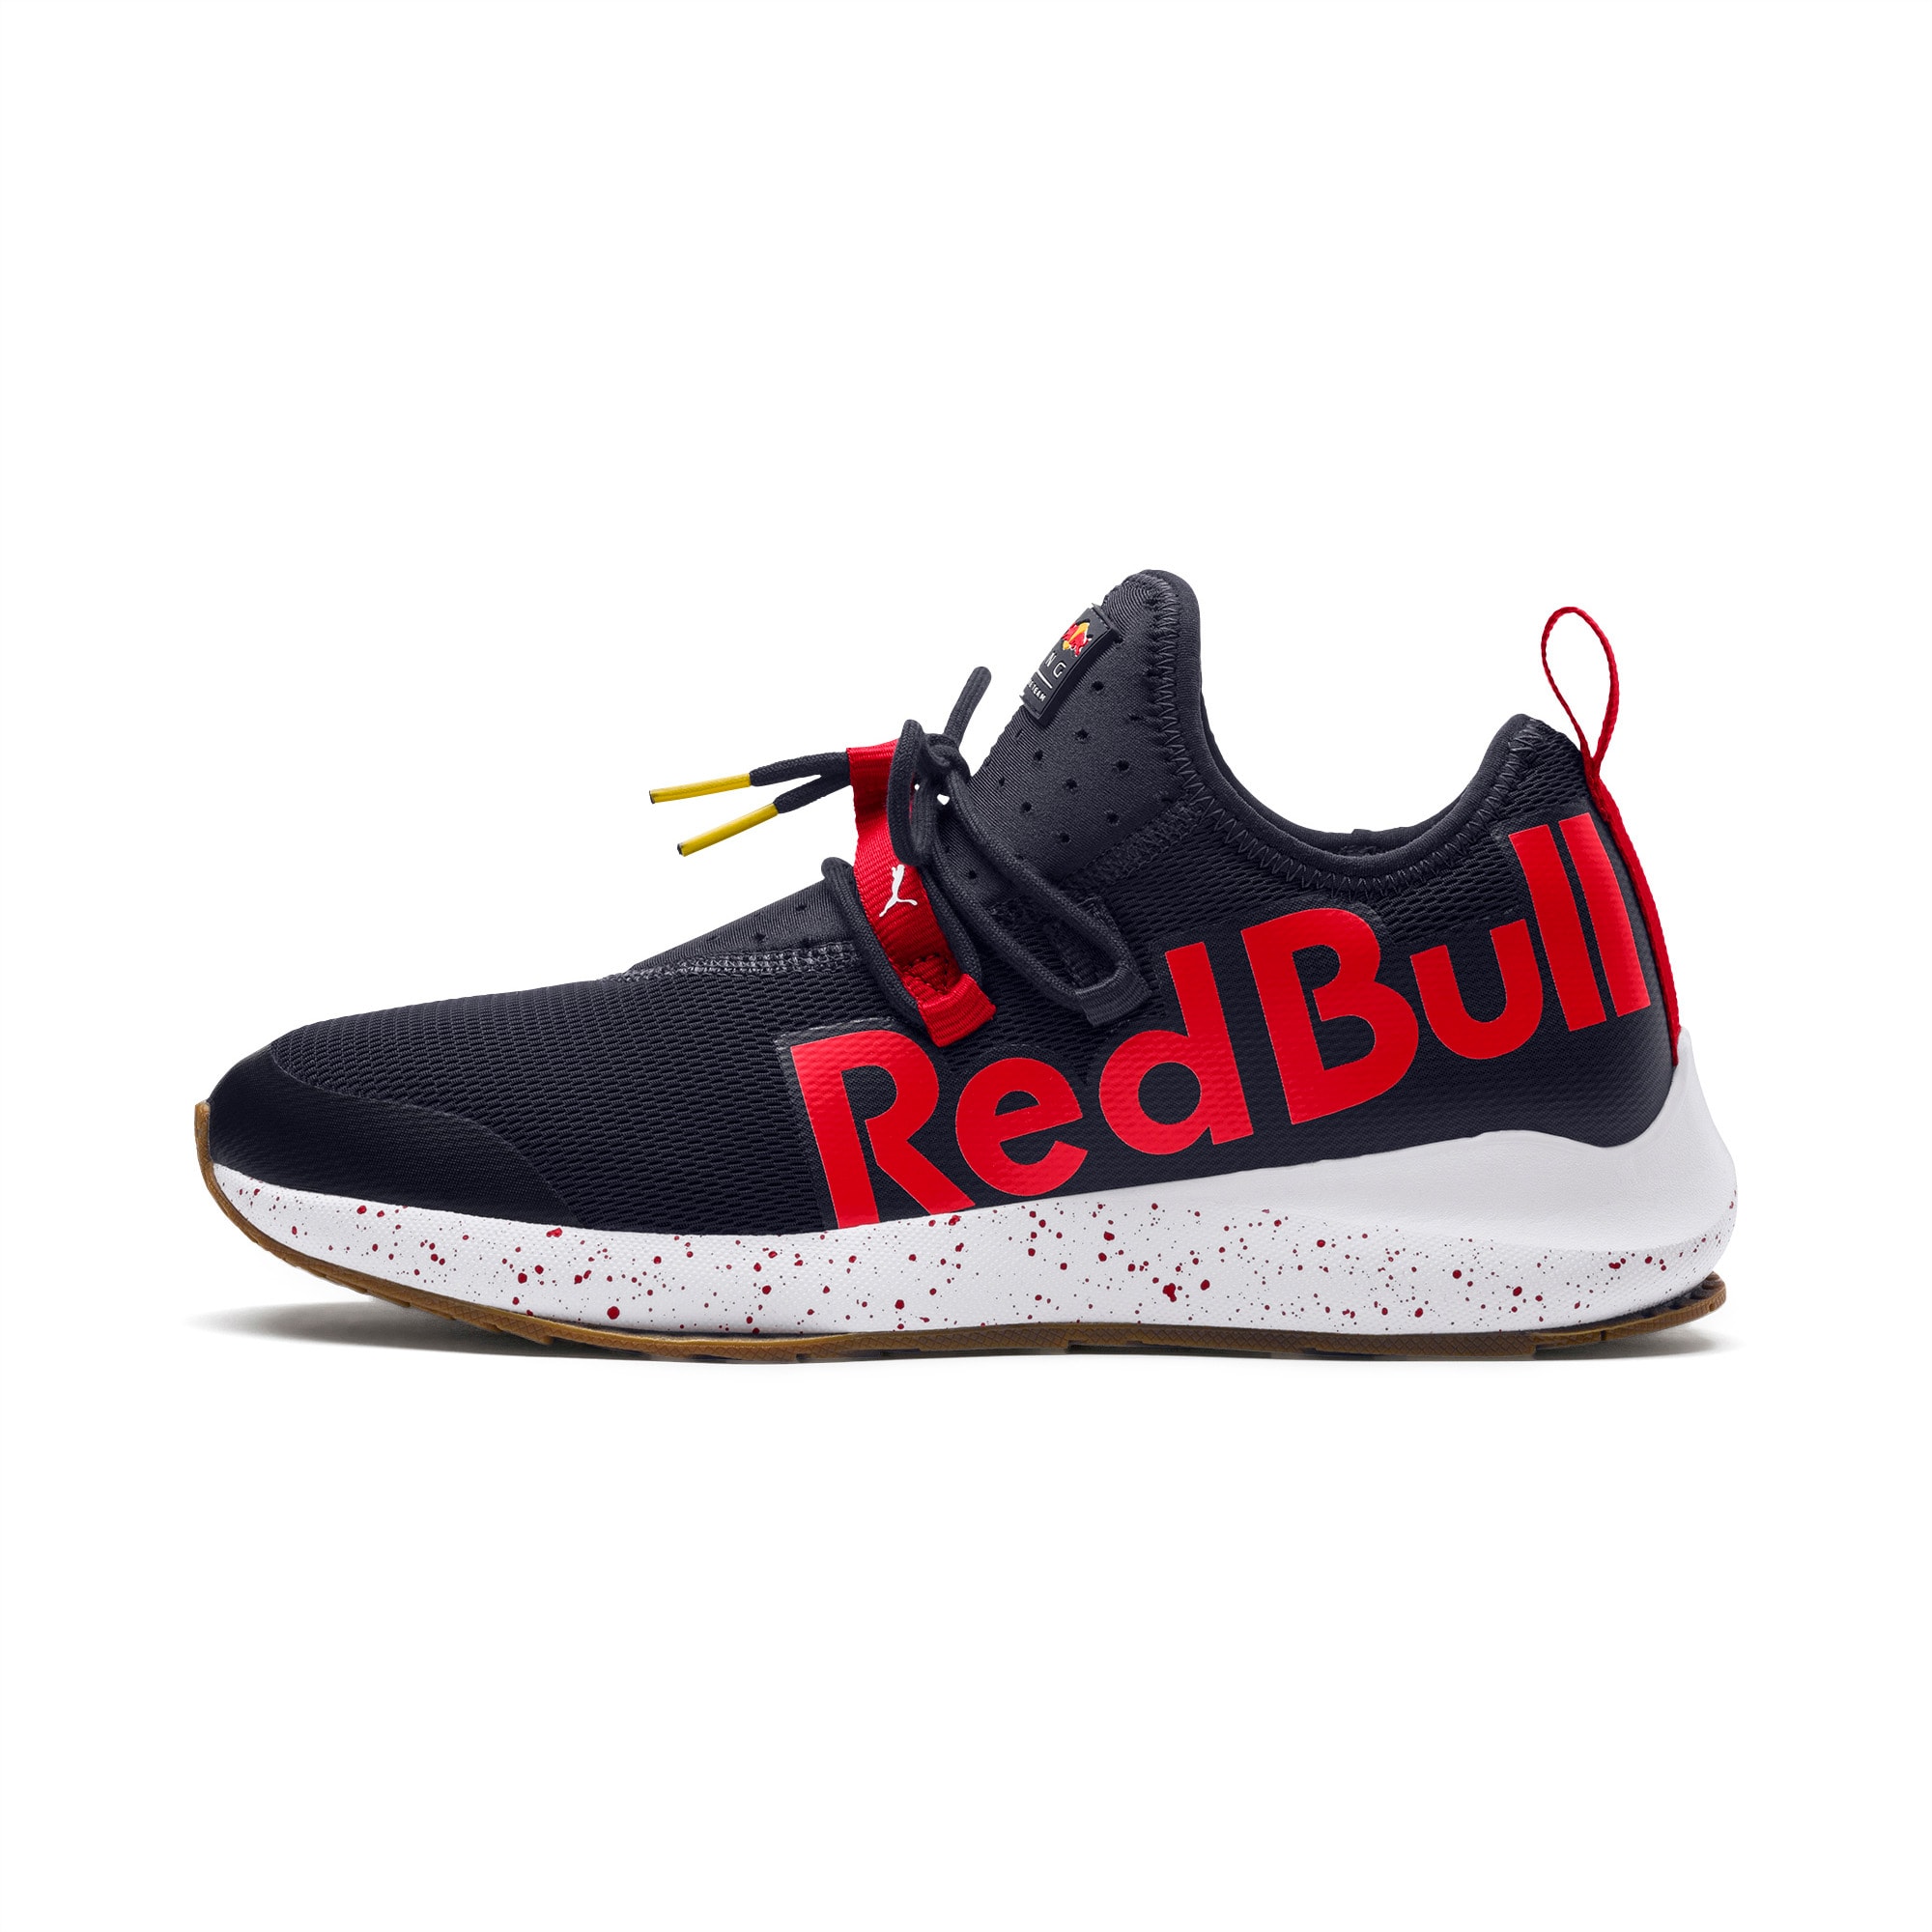 red bull racing evo cat ii sneakers